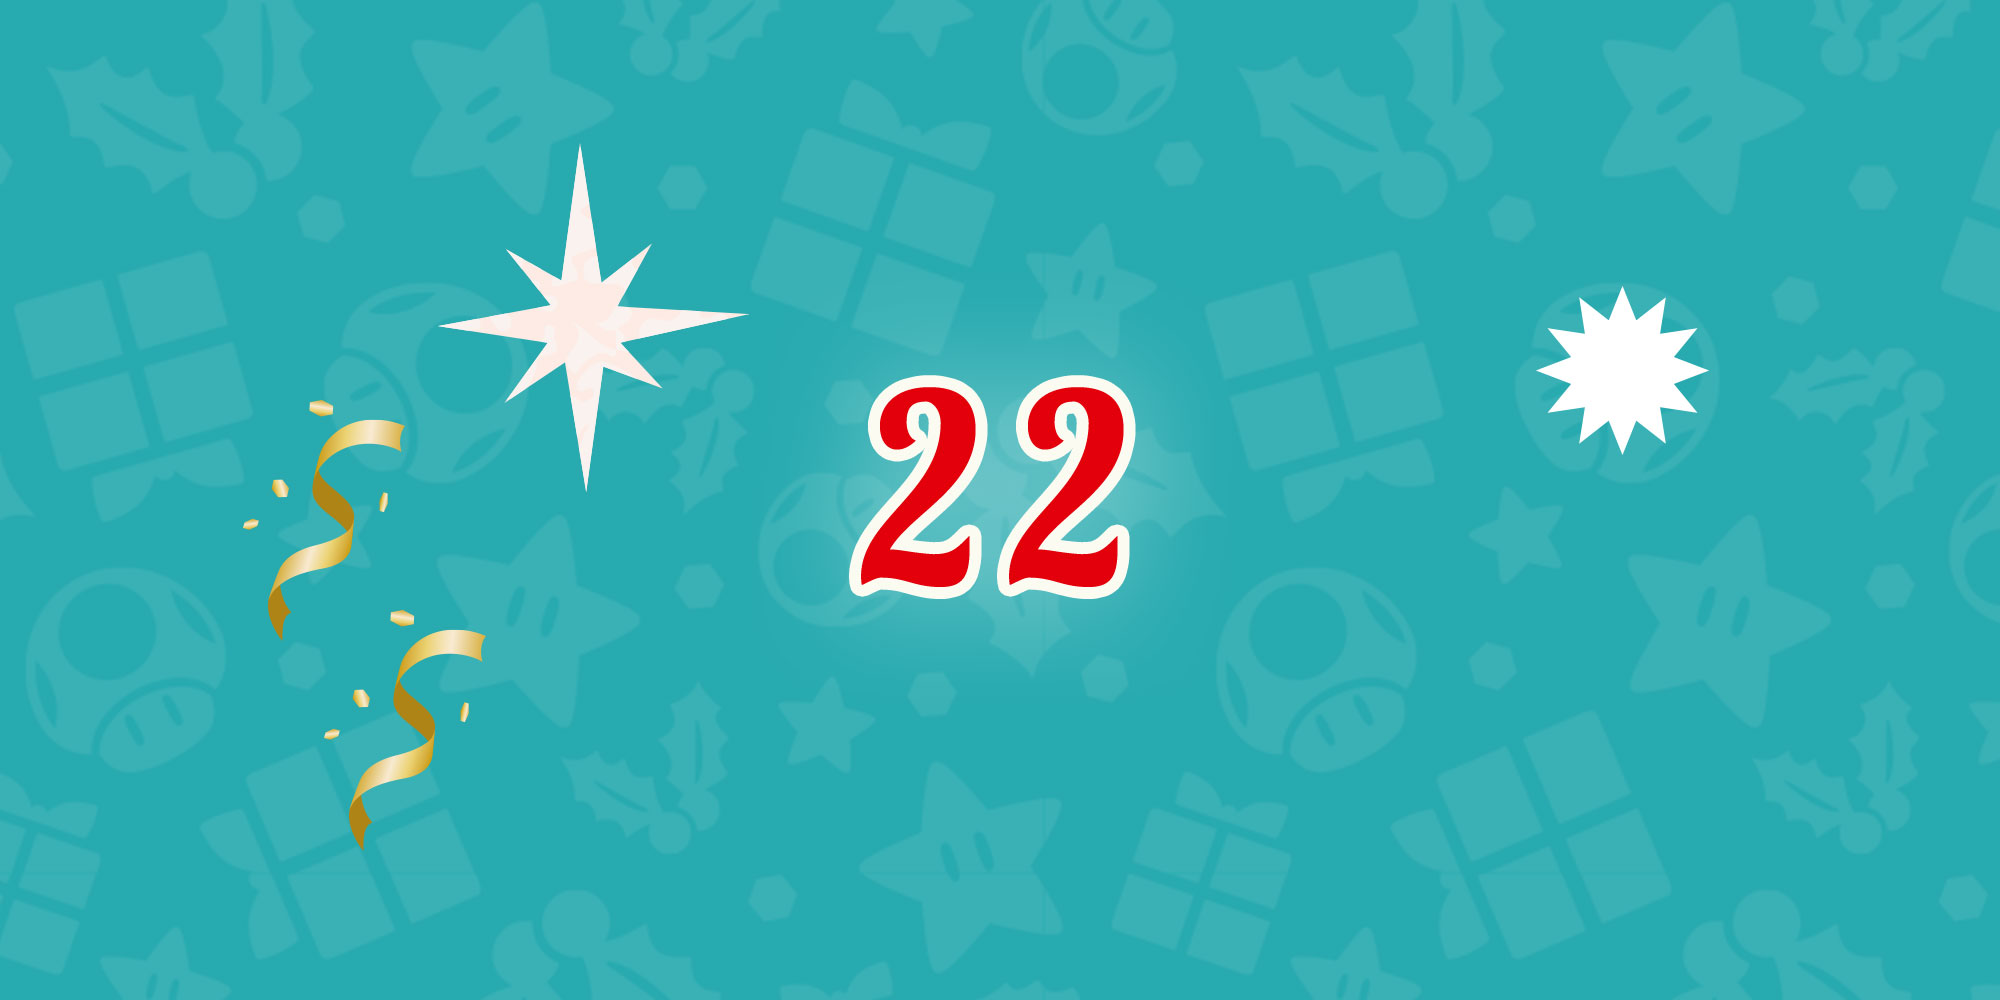 Nintendo-Adventskalender: Tag 22